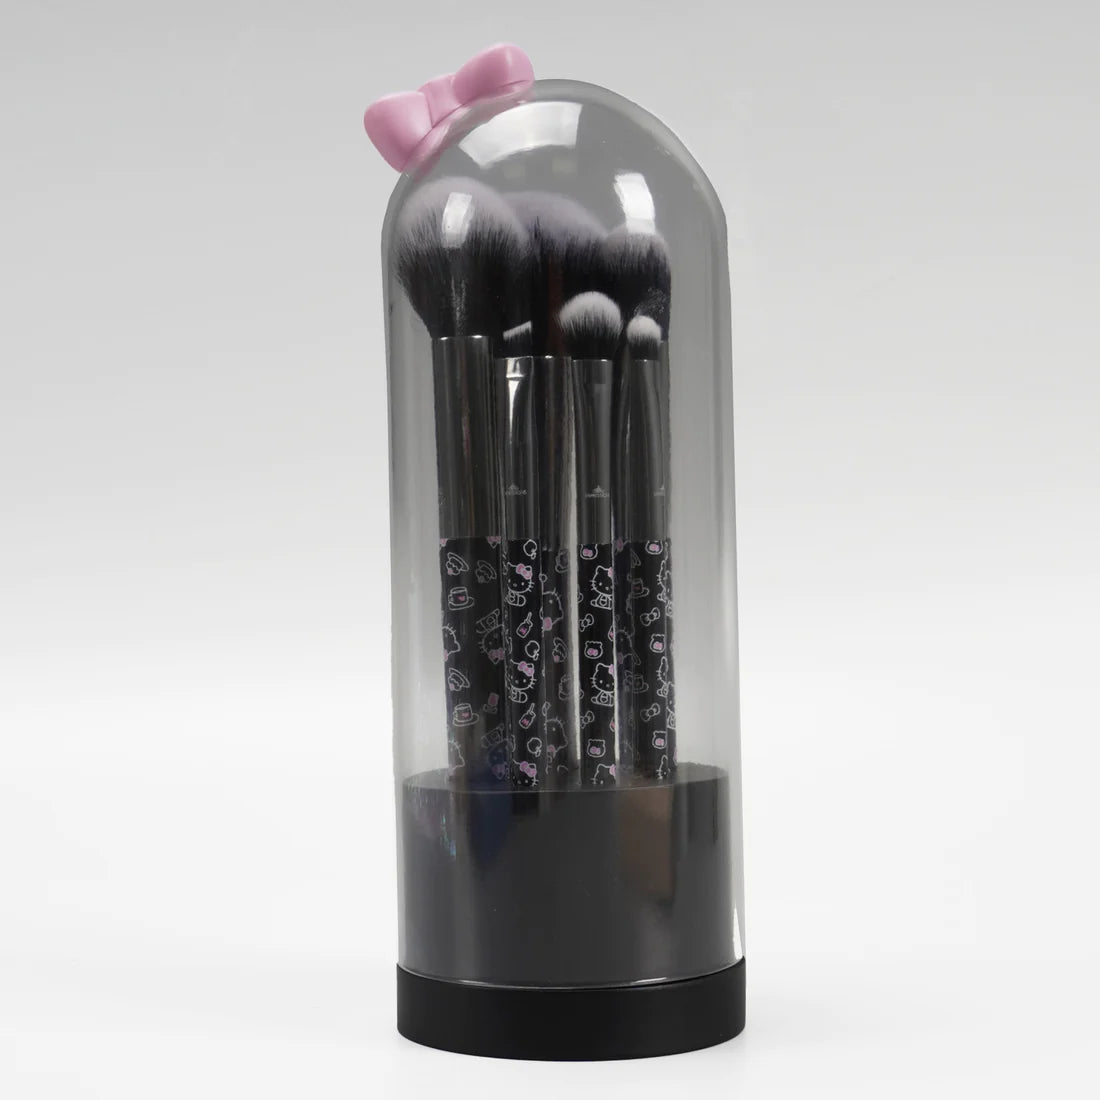 Impressions Vanity - Hello Kitty The Favorites Bell Jar 6pc Brush Gift Set Black